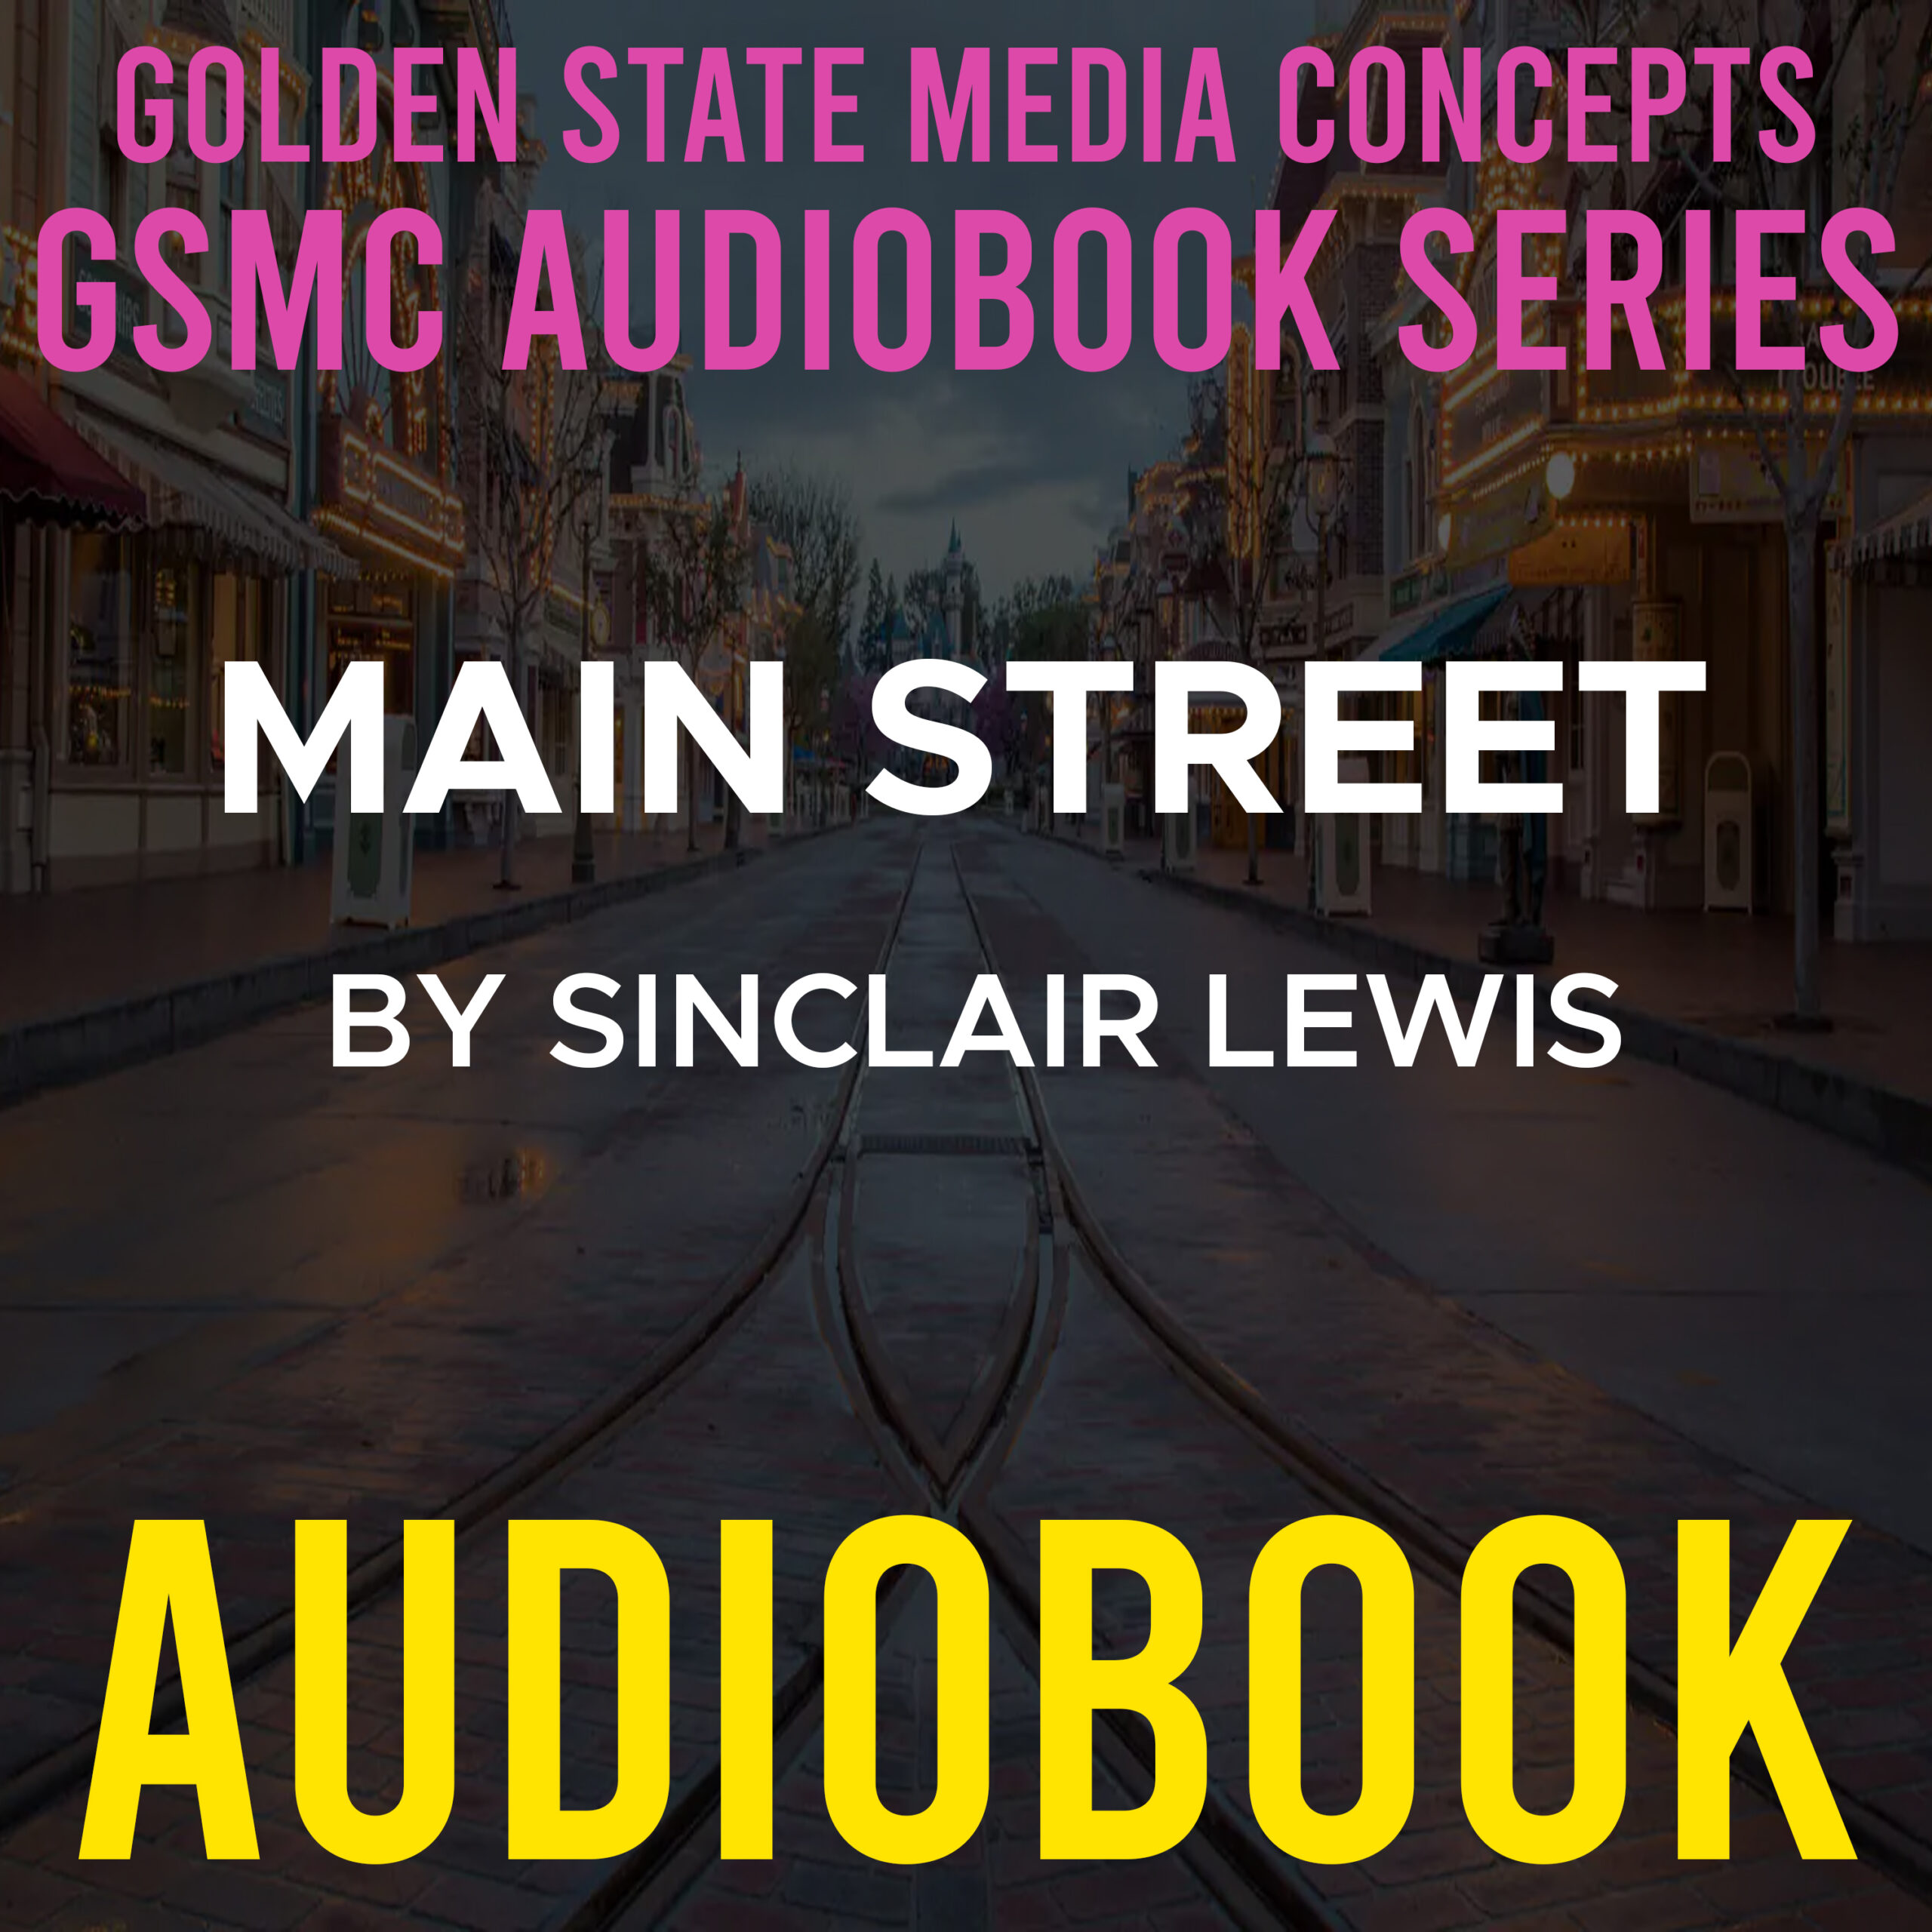 GSMC Audiobook Series: Main Street by Sinclair Lewis